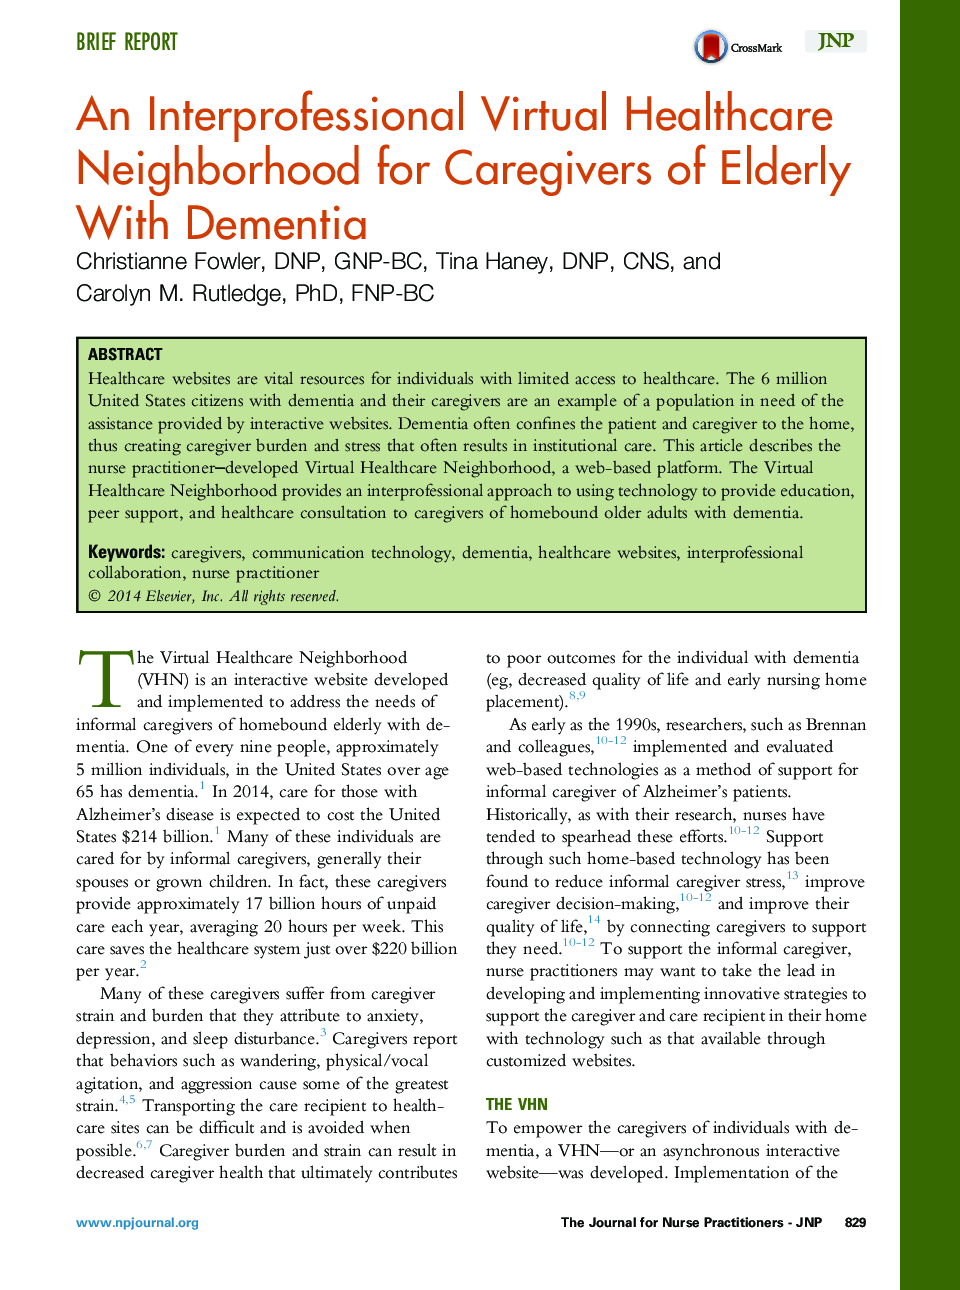 An Interprofessional Virtual Healthcare Neighborhood for Caregivers of Elderly With Dementia 